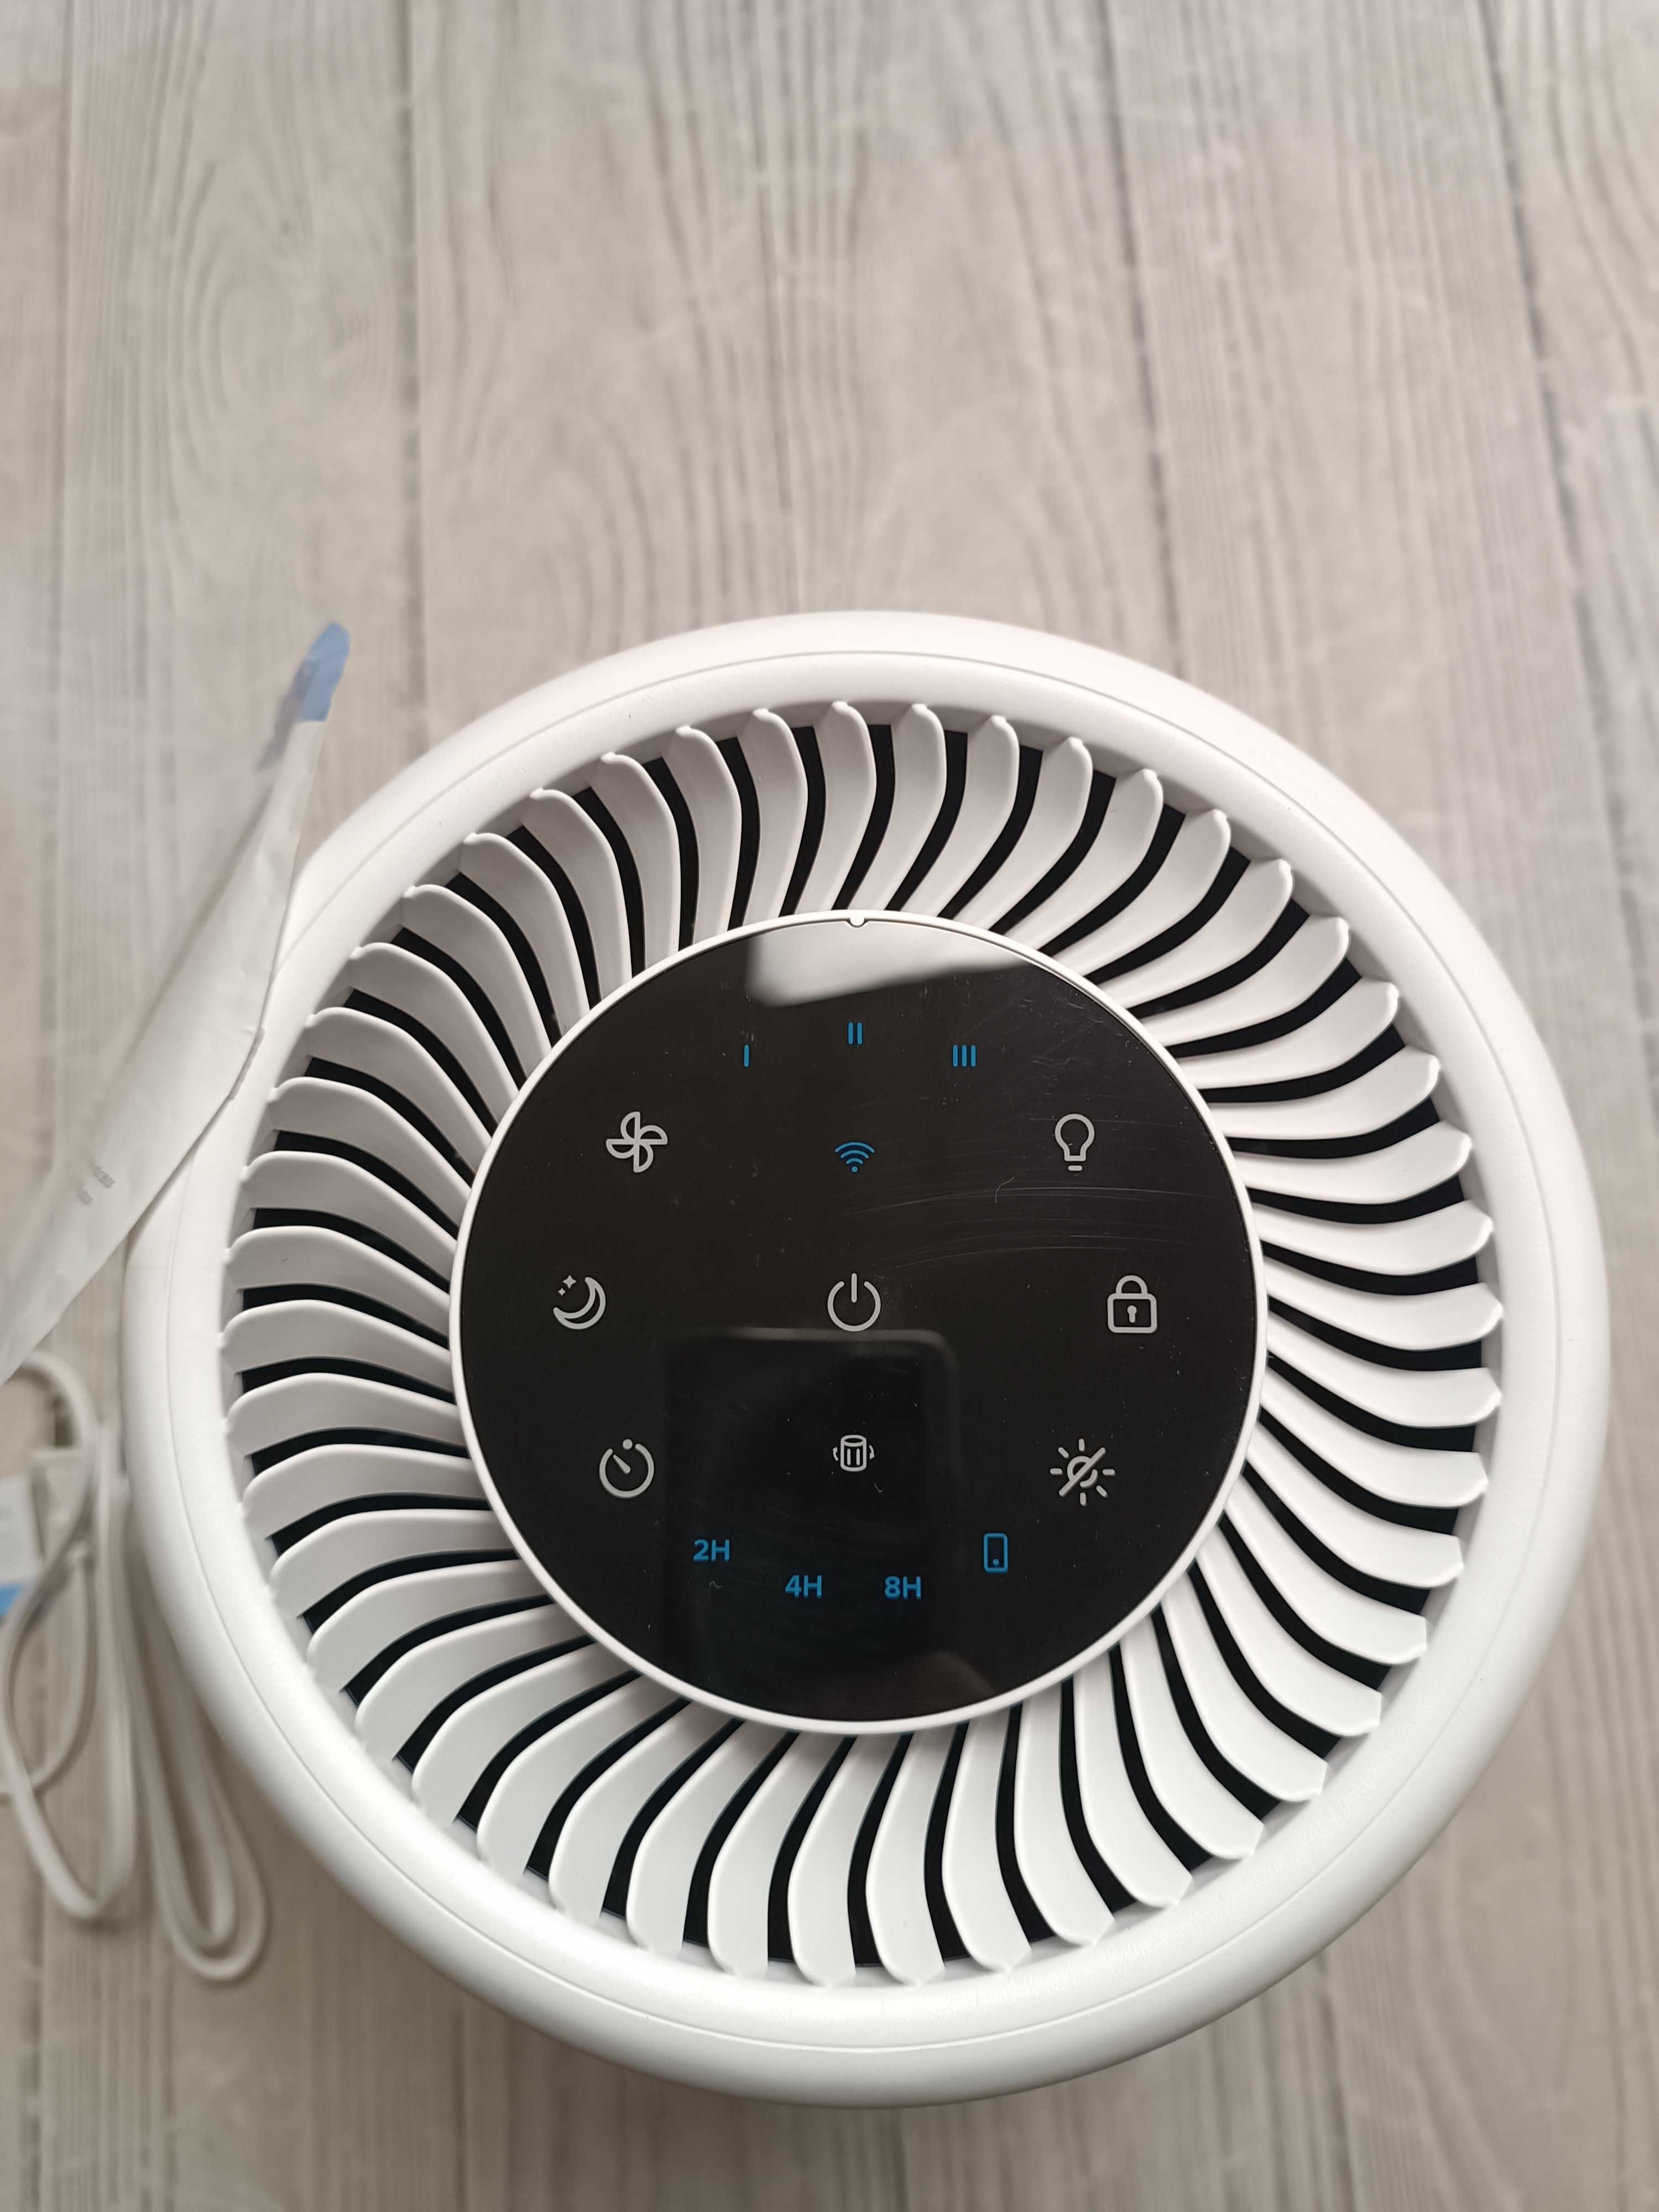 Levoit Smart Air Purifier Core 200S розумний очищувач повітря